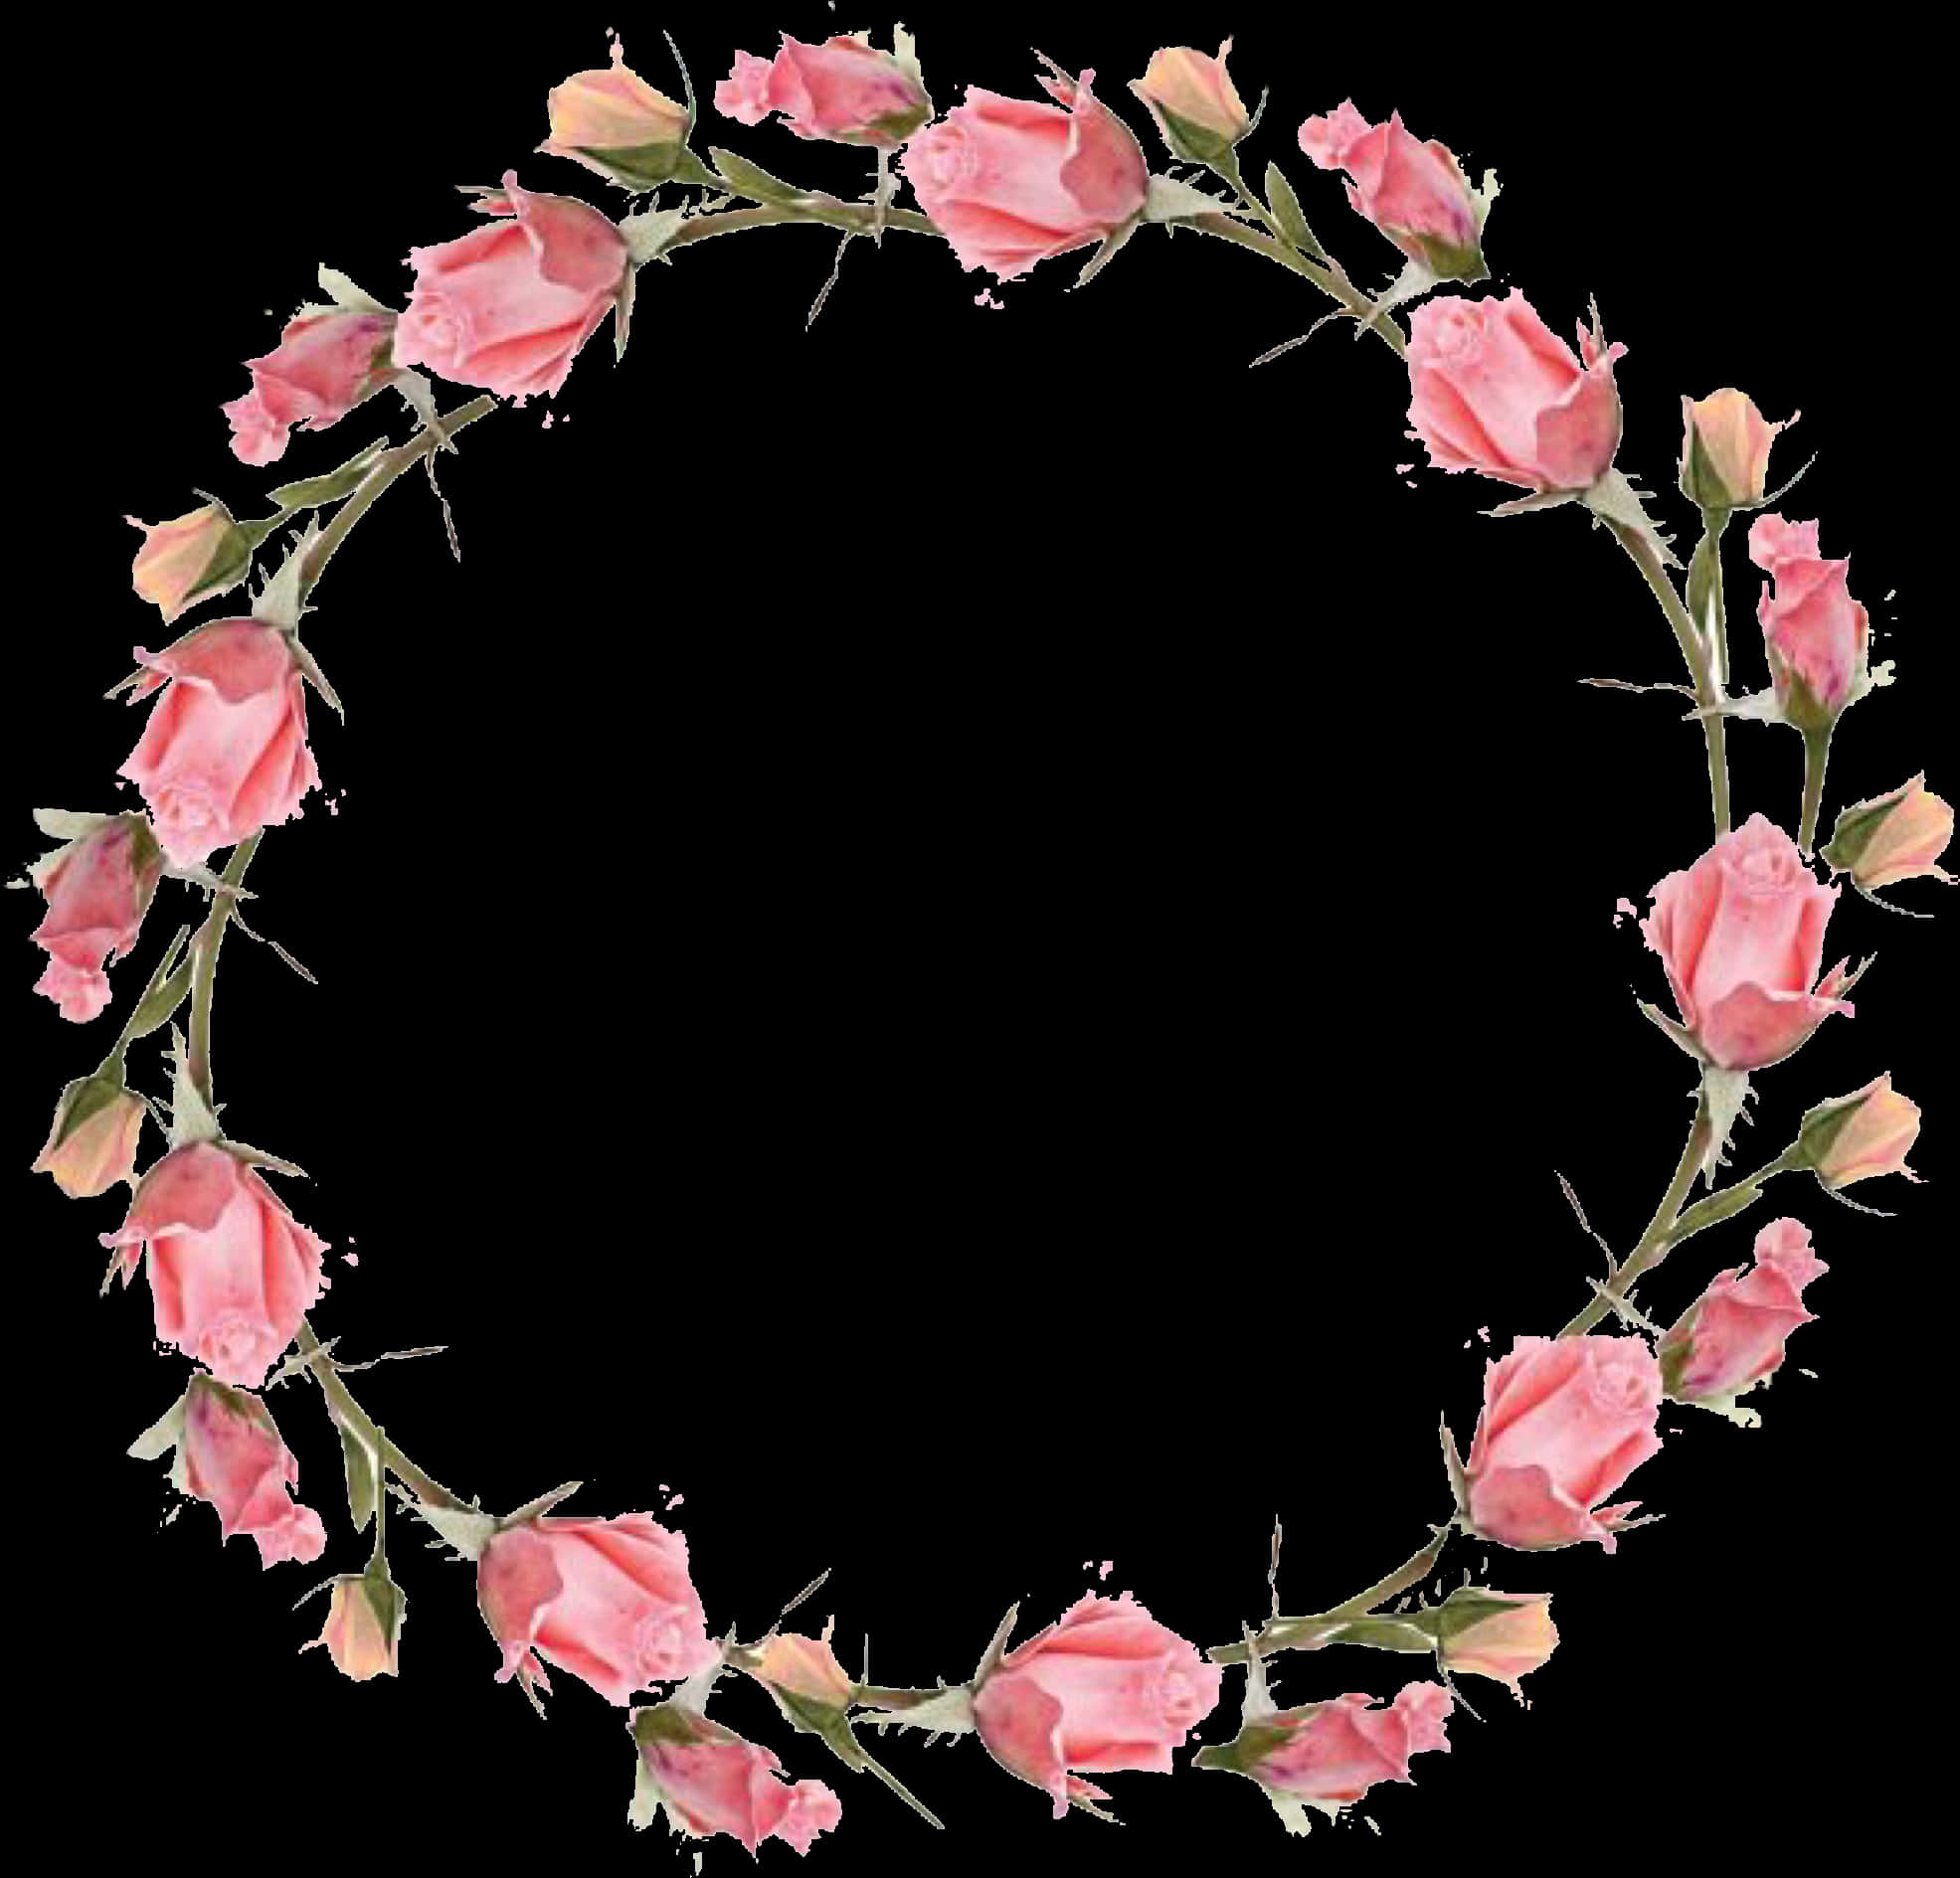 A Circle Of Pink Roses